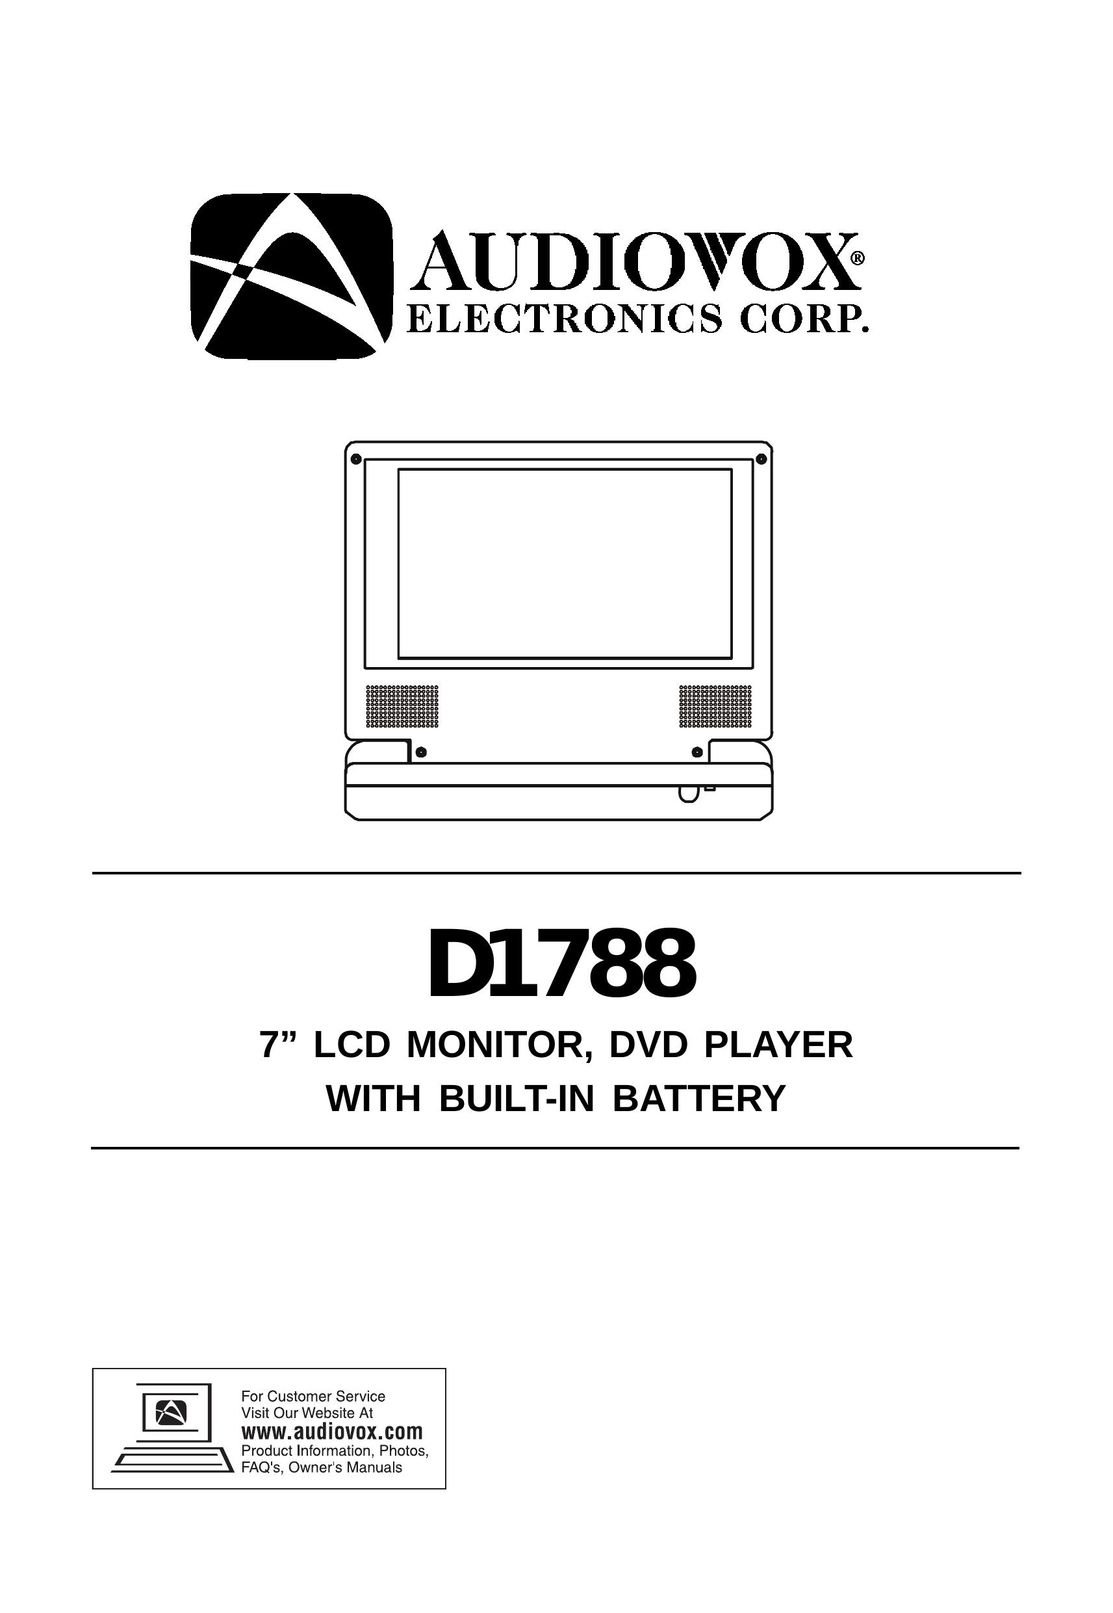 Audiovox D1788 DVD Player User Manual